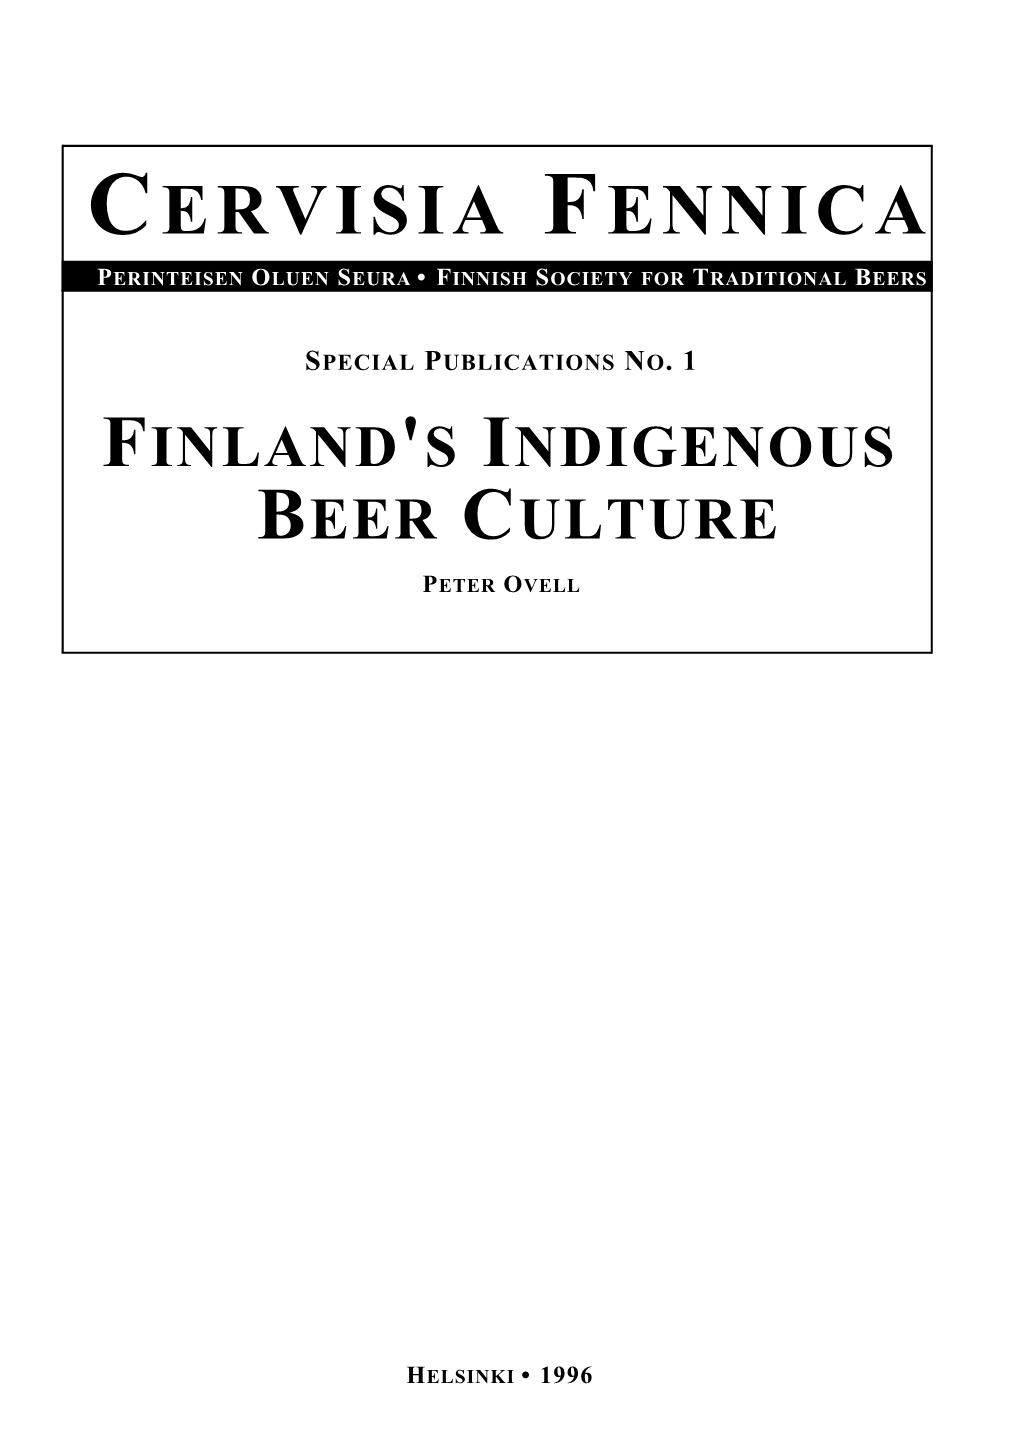 Finland's Indigenous Beer Culture